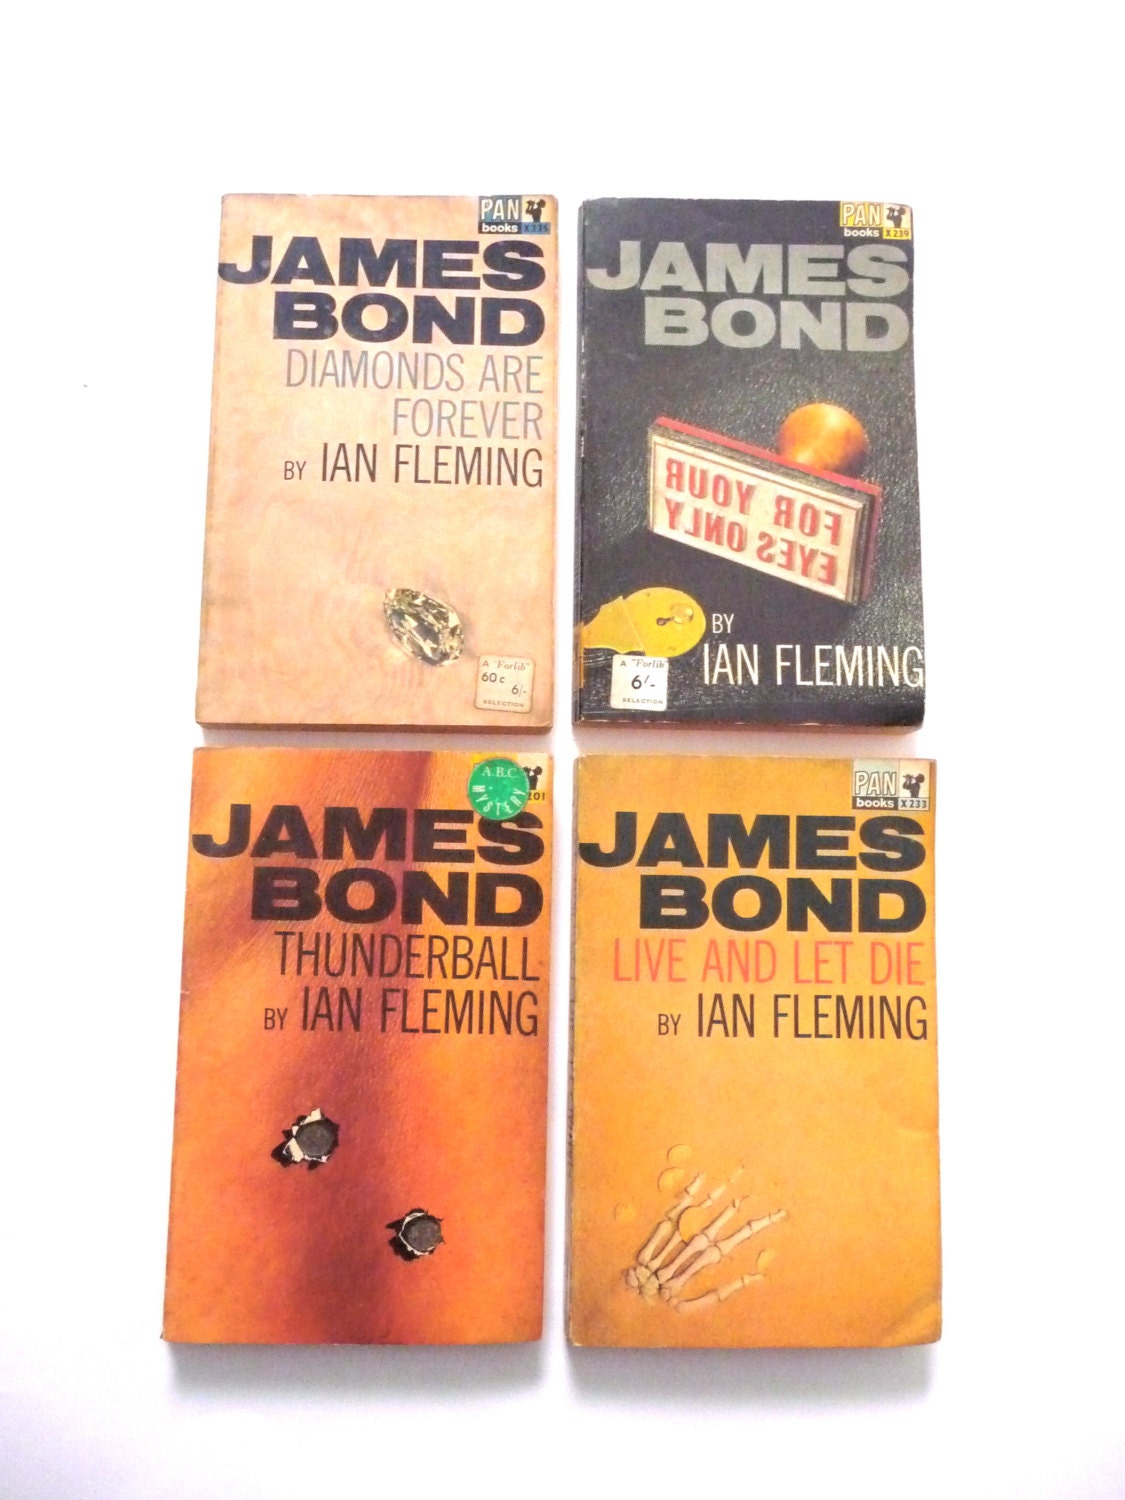 Vintage James Bond Books Paperback 1960s Editions